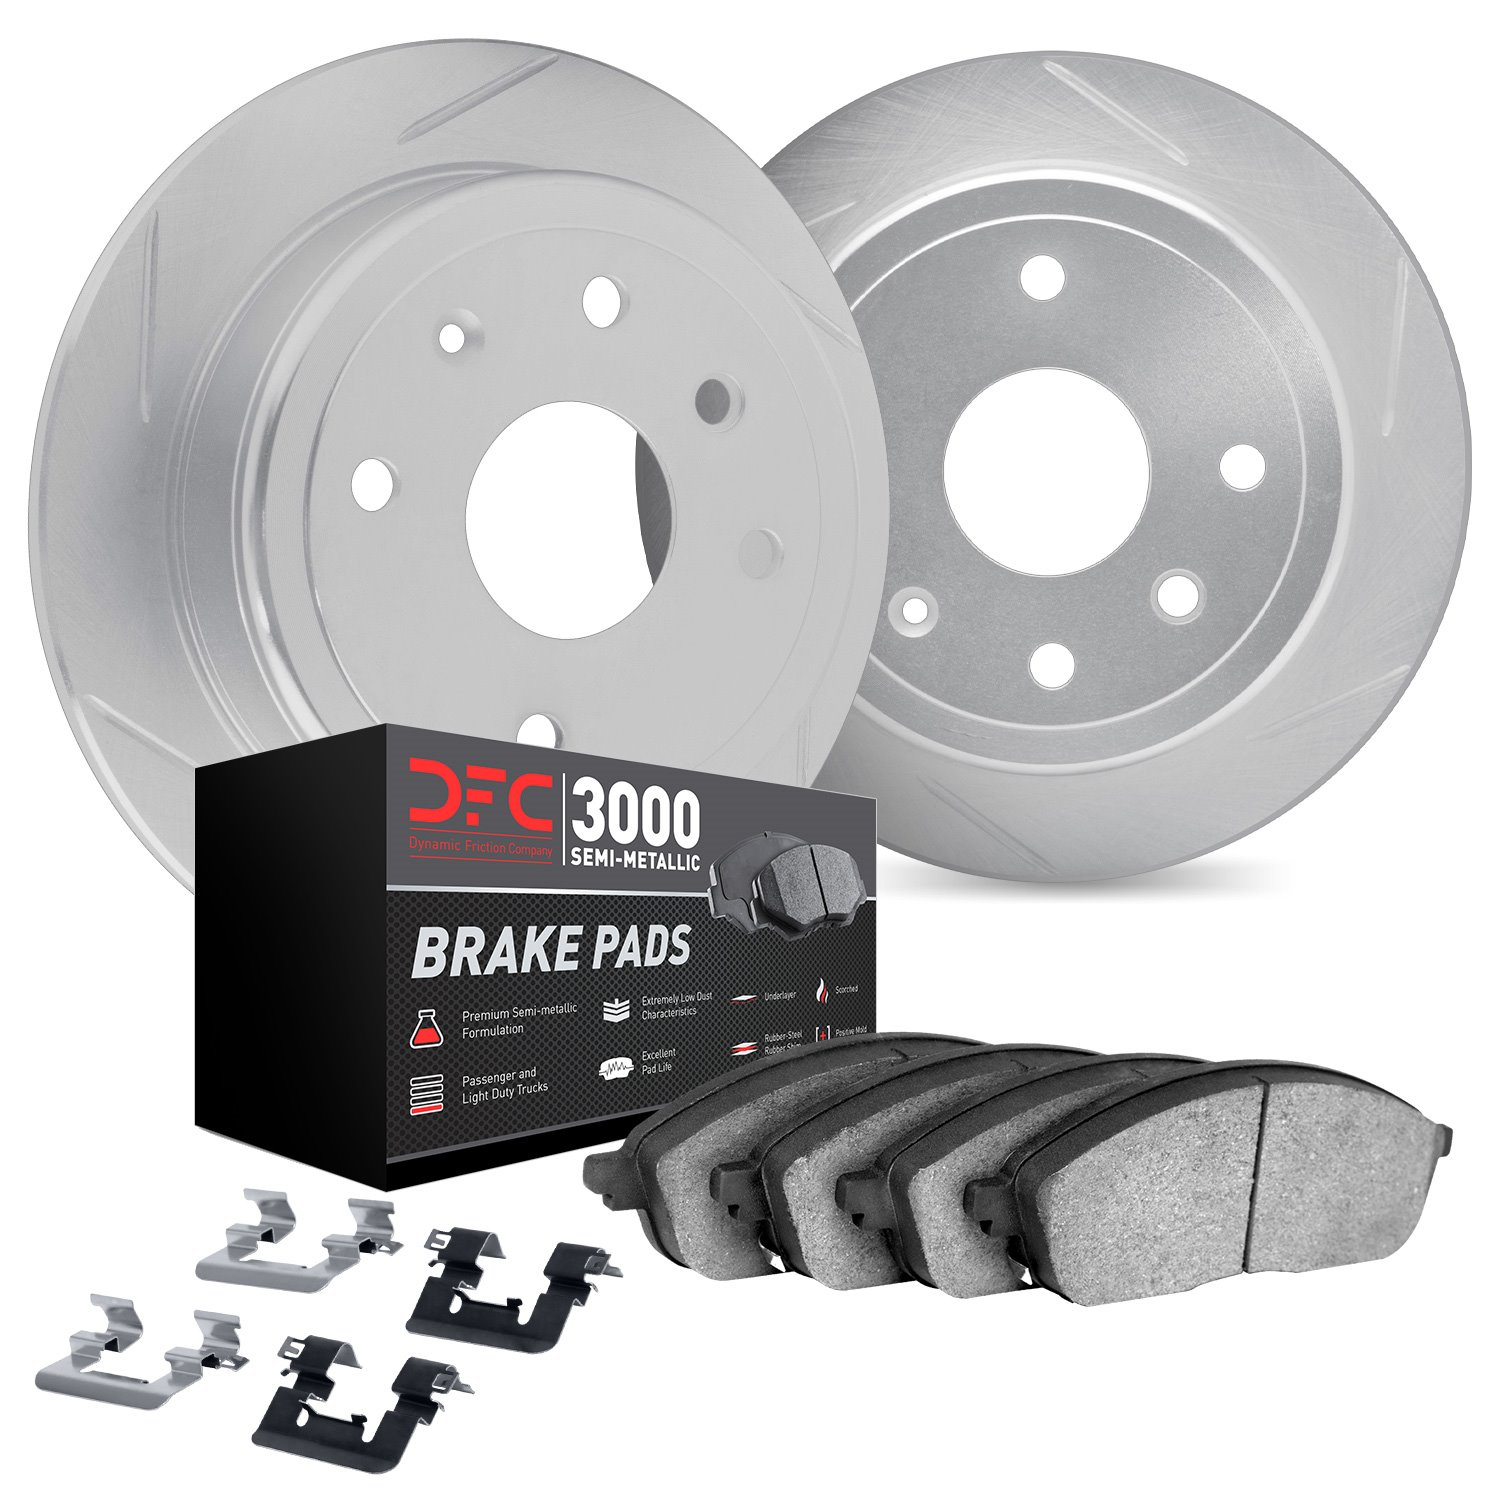 5112-42037 Slotted Brake Rotors with 3000-Series Semi-Metallic Brake Pads Kit & Hardware [Silver], Fits Select Mopar, Position: